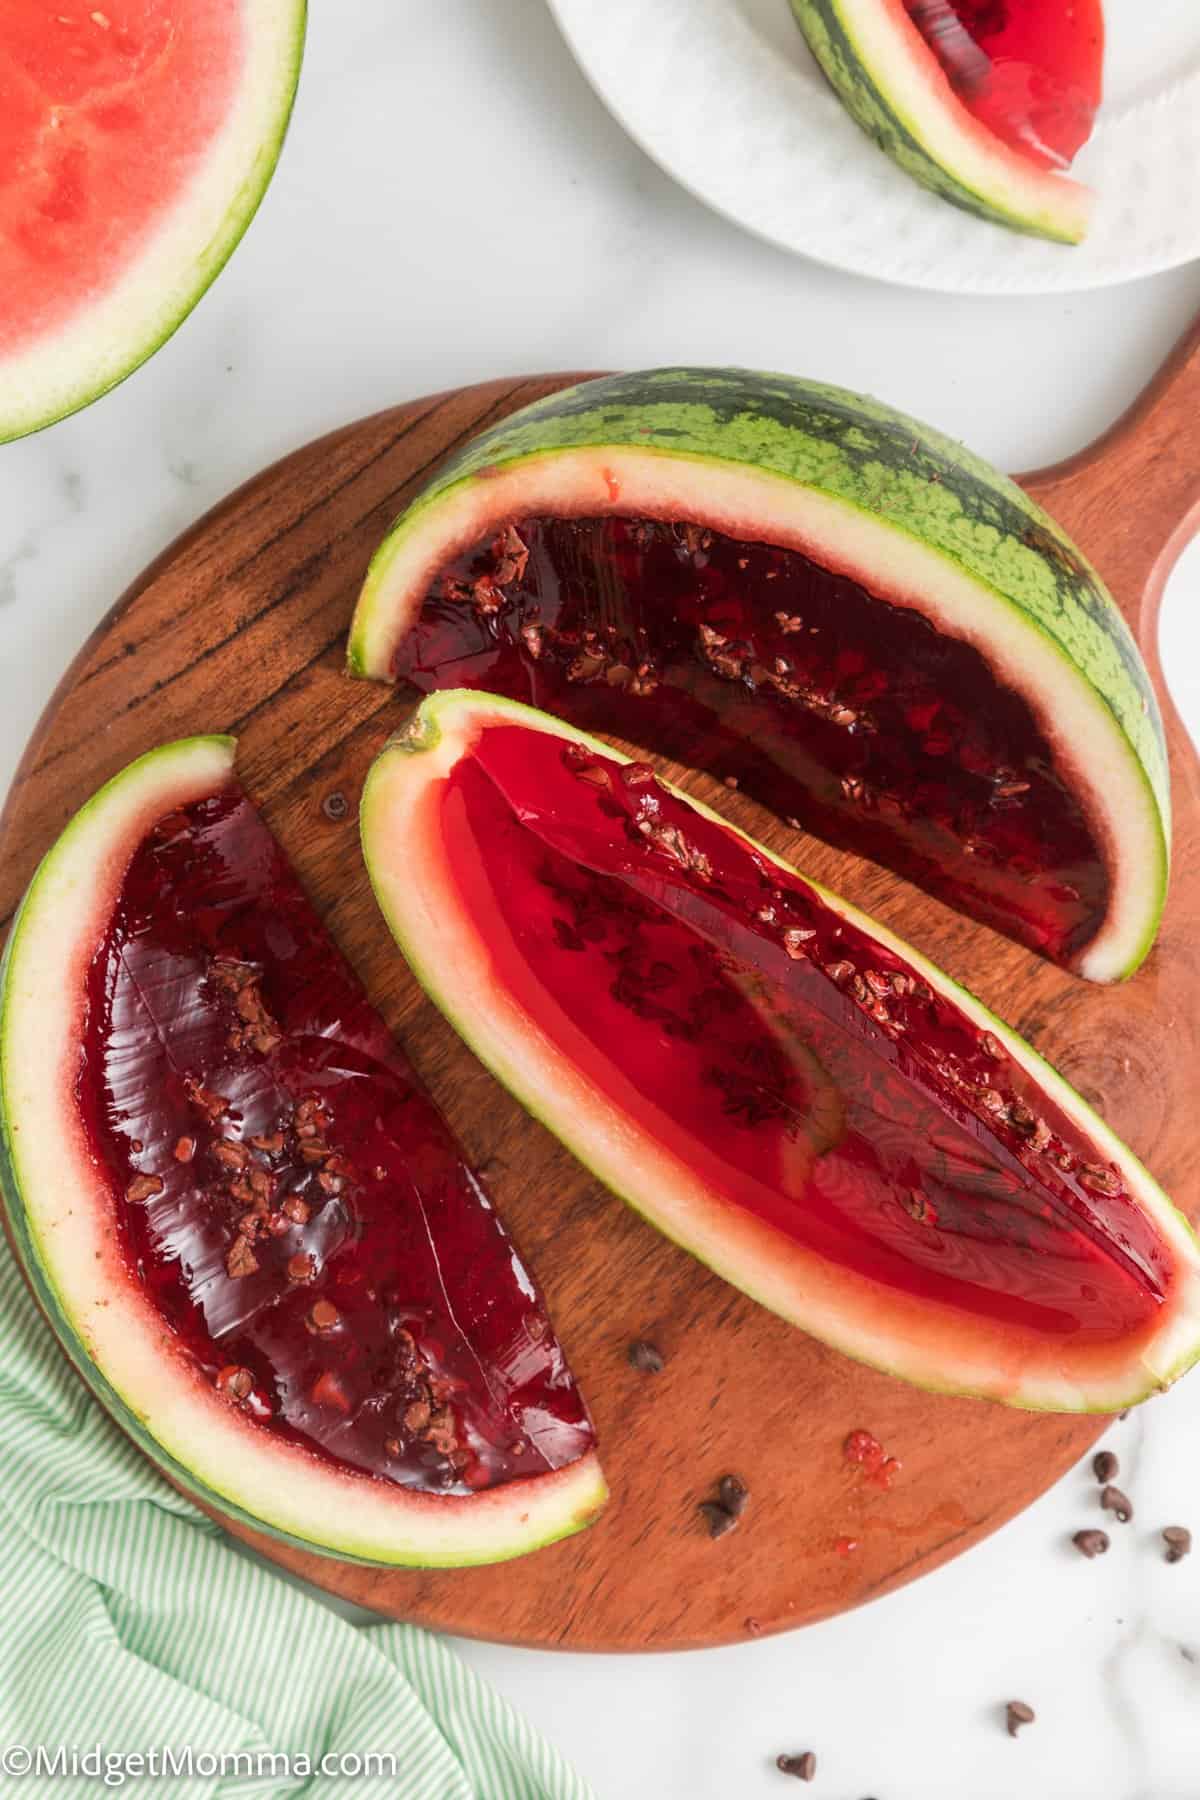 Watermelon Jell-O Slices Recipe (How to Fill a Watermelon with Jello)